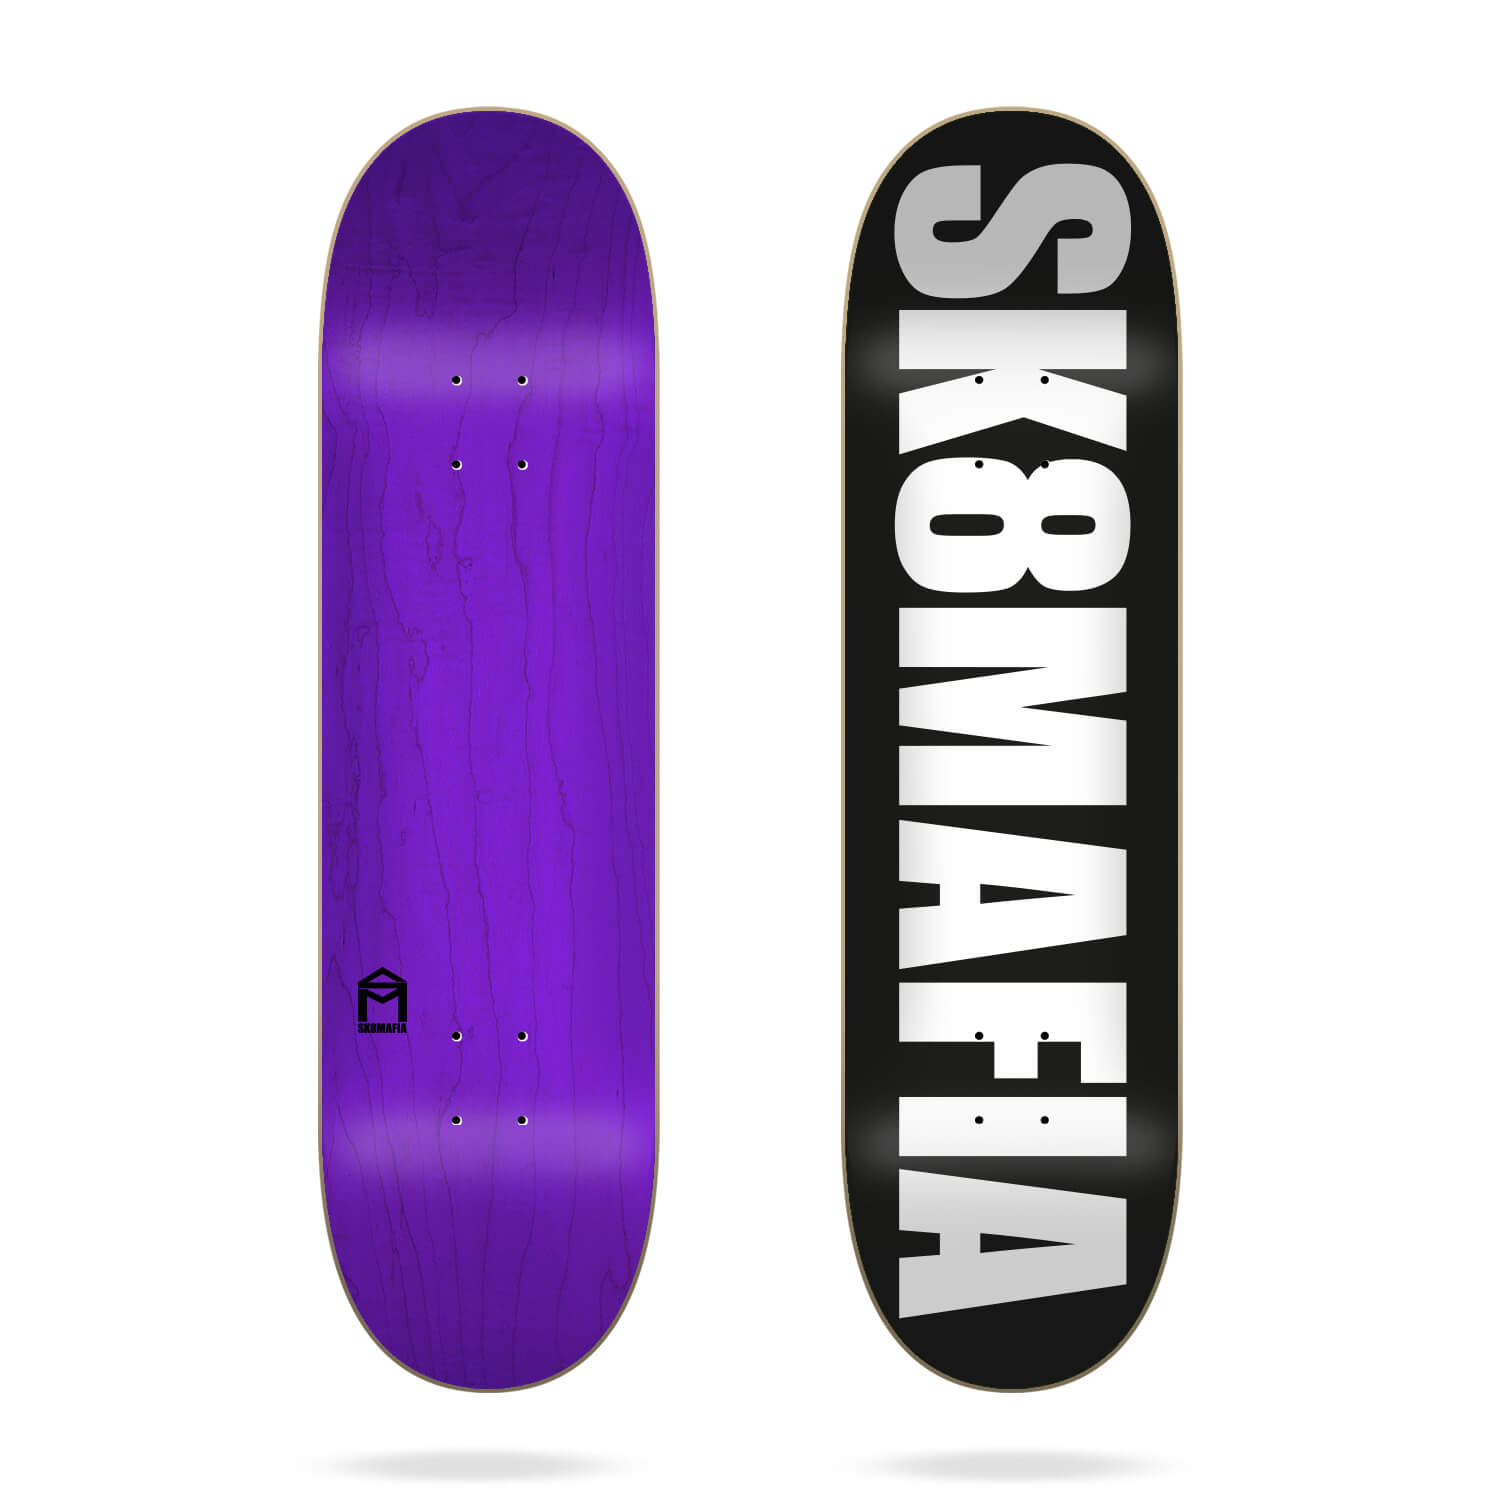 SK8MAFIA Skateboards Store: Decks, Completes, Accessories